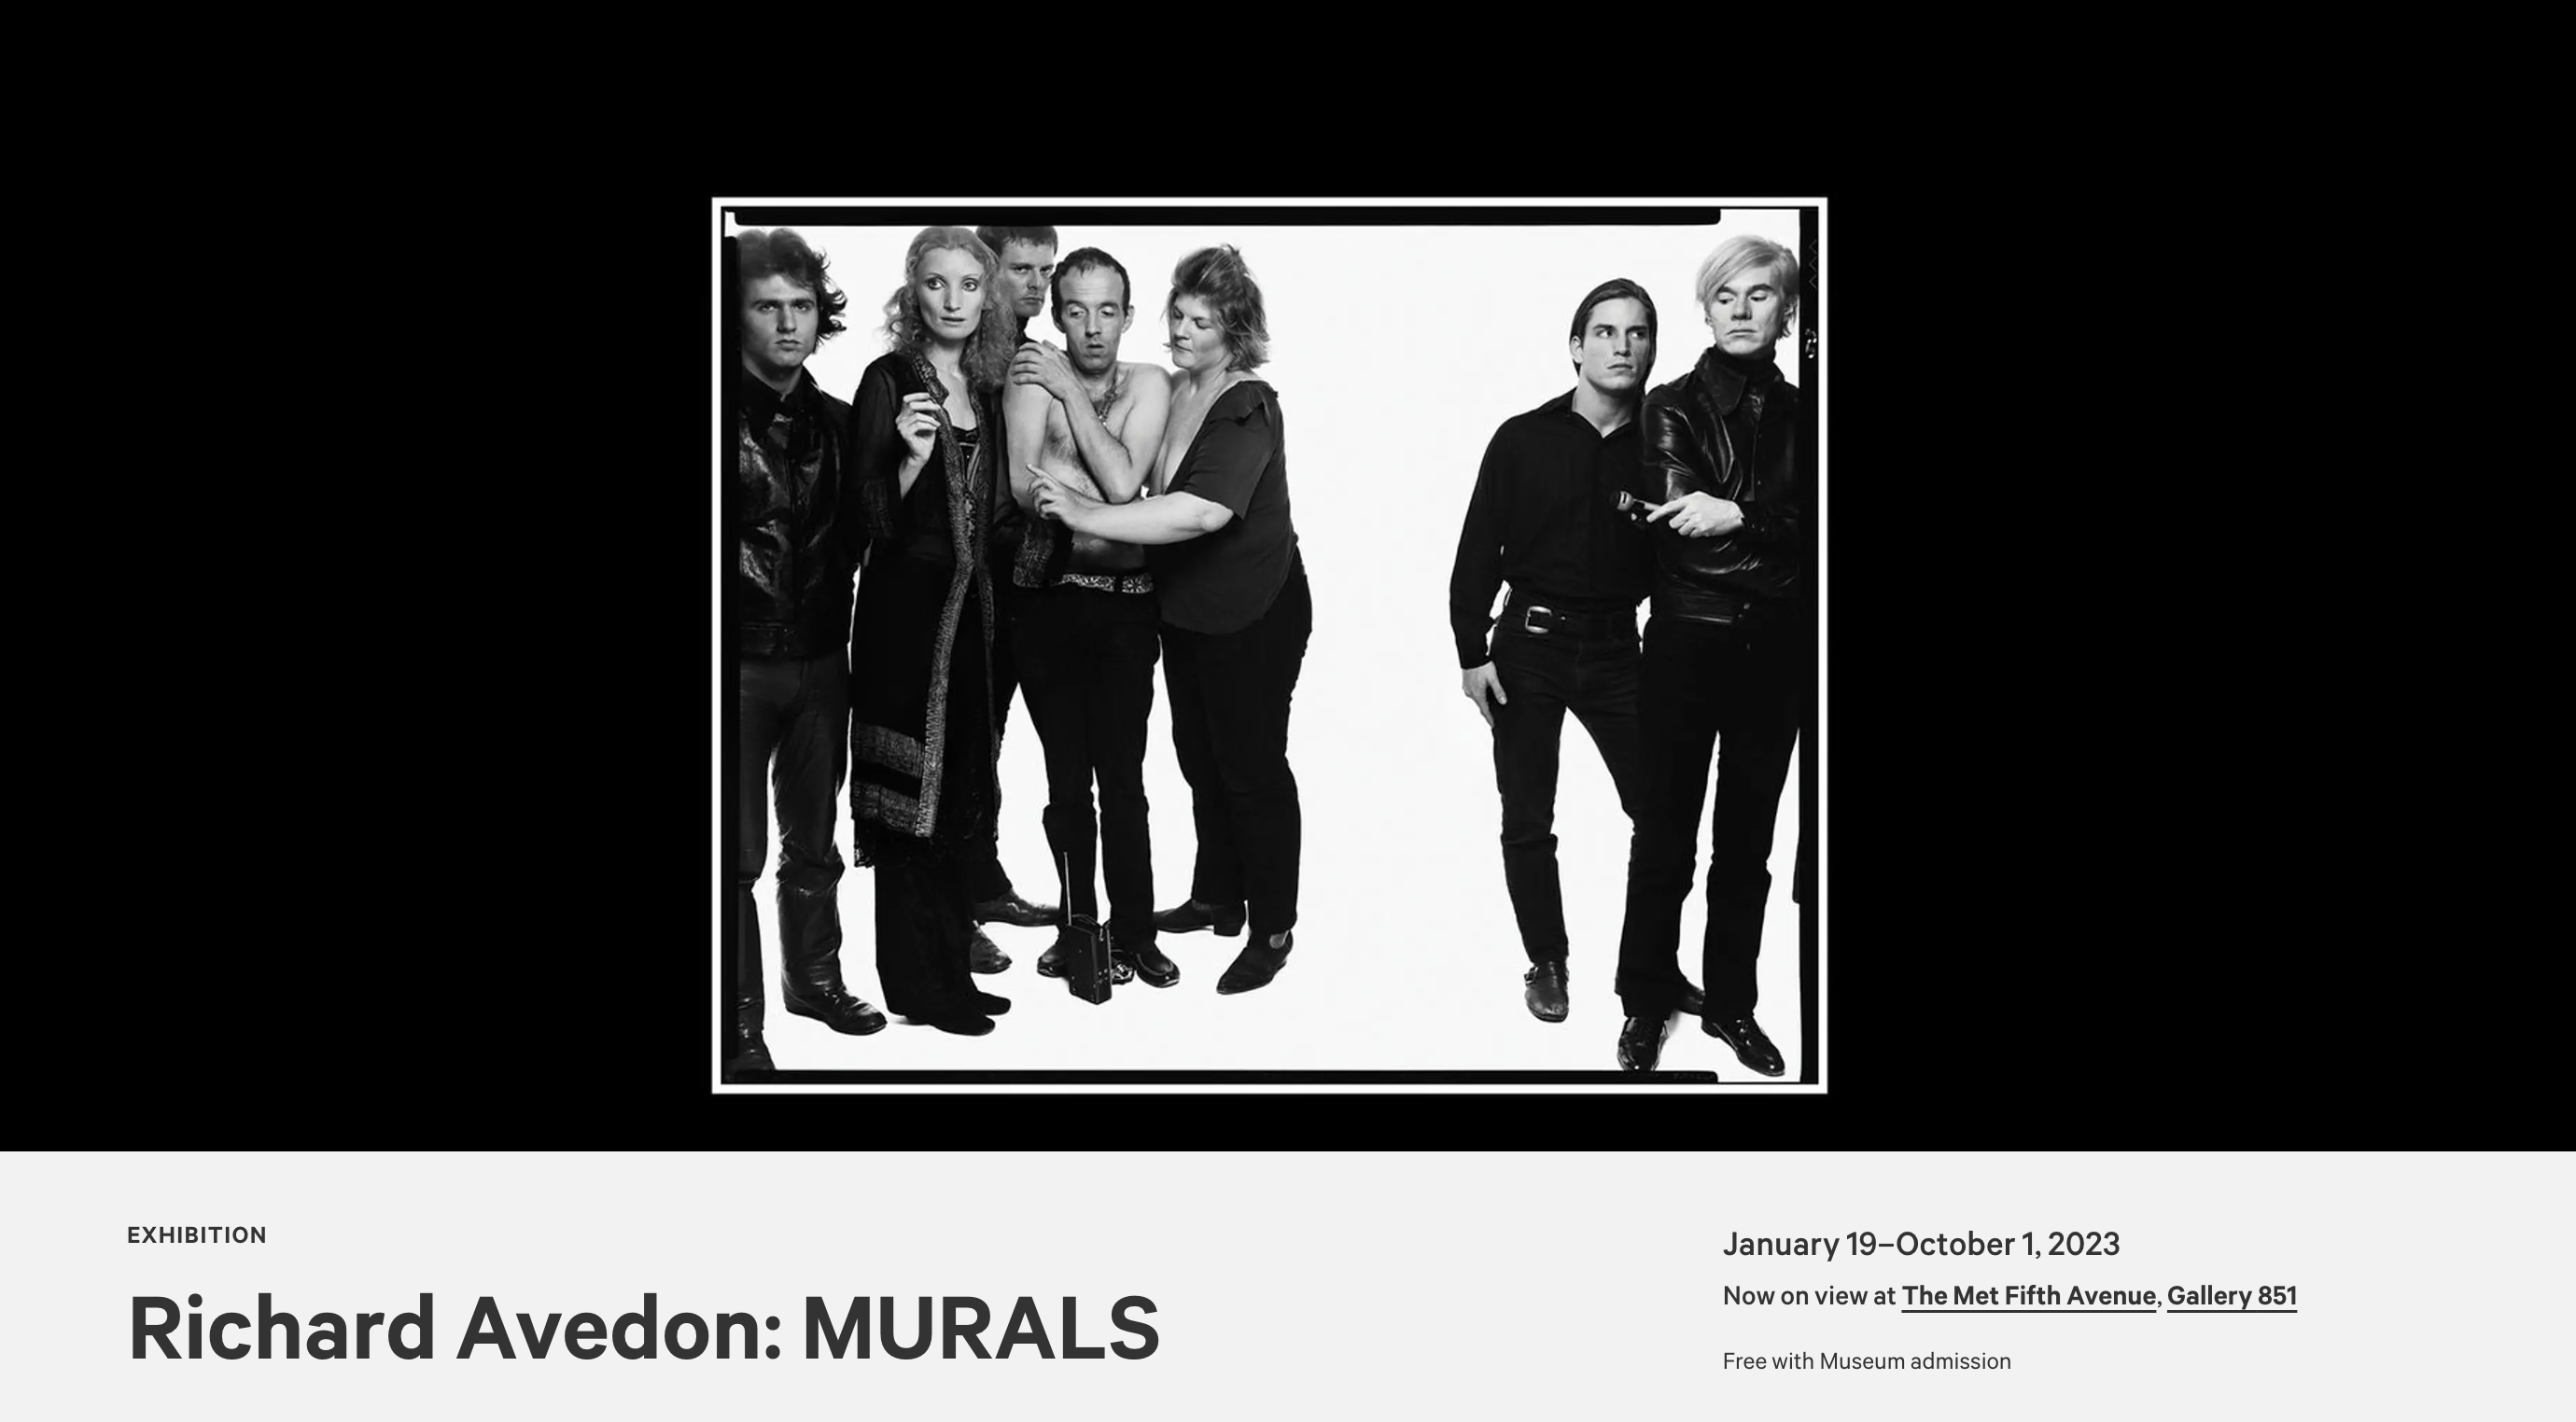 Exhibition: Richard Avedon: MURALS at THE MET